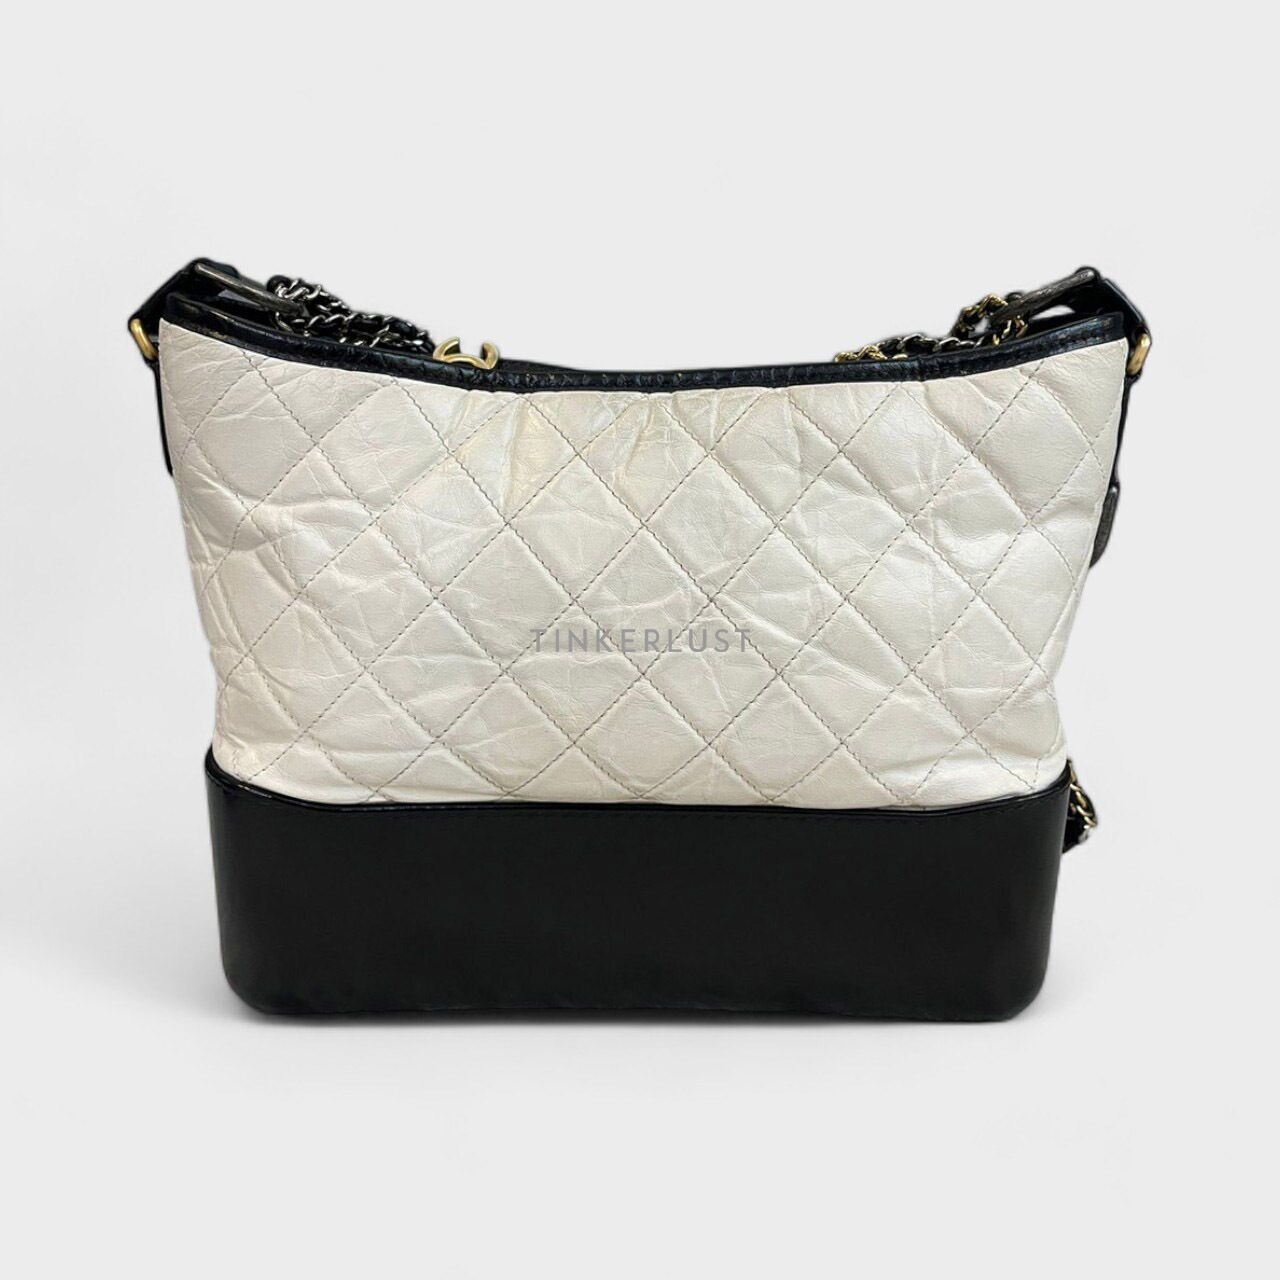 Chanel Gabrielle Medium Black & White Calfskin #25 Shoulder Bag